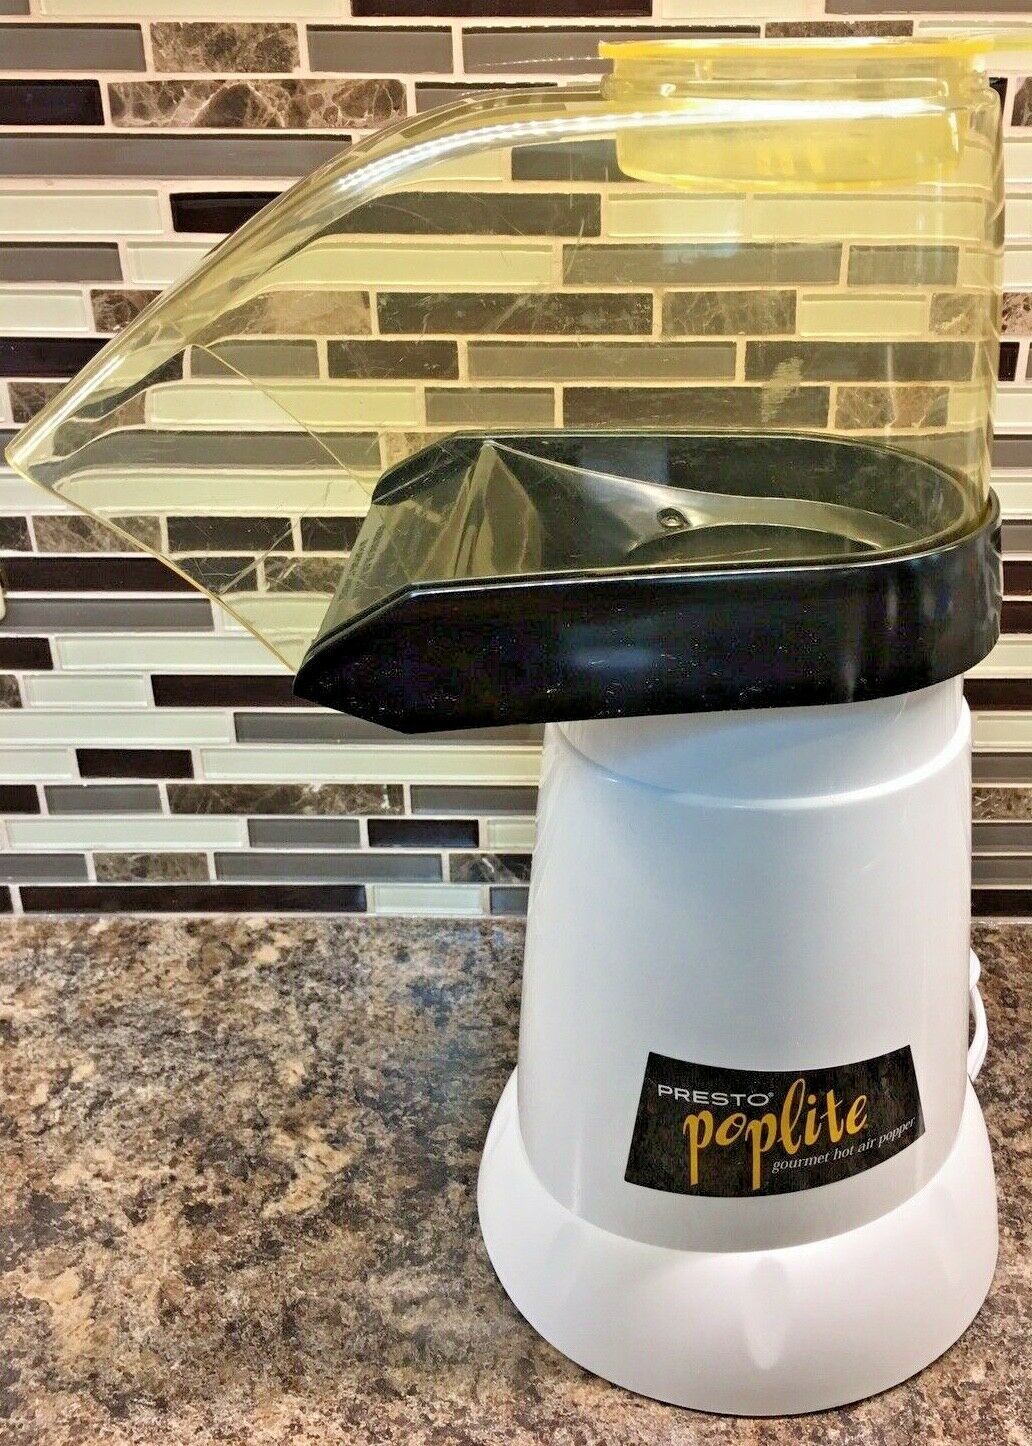 Presto Poplite Gourmet Hot Air Popper Popcorn Maker 1440 Watts Model 0482007 - $25.20